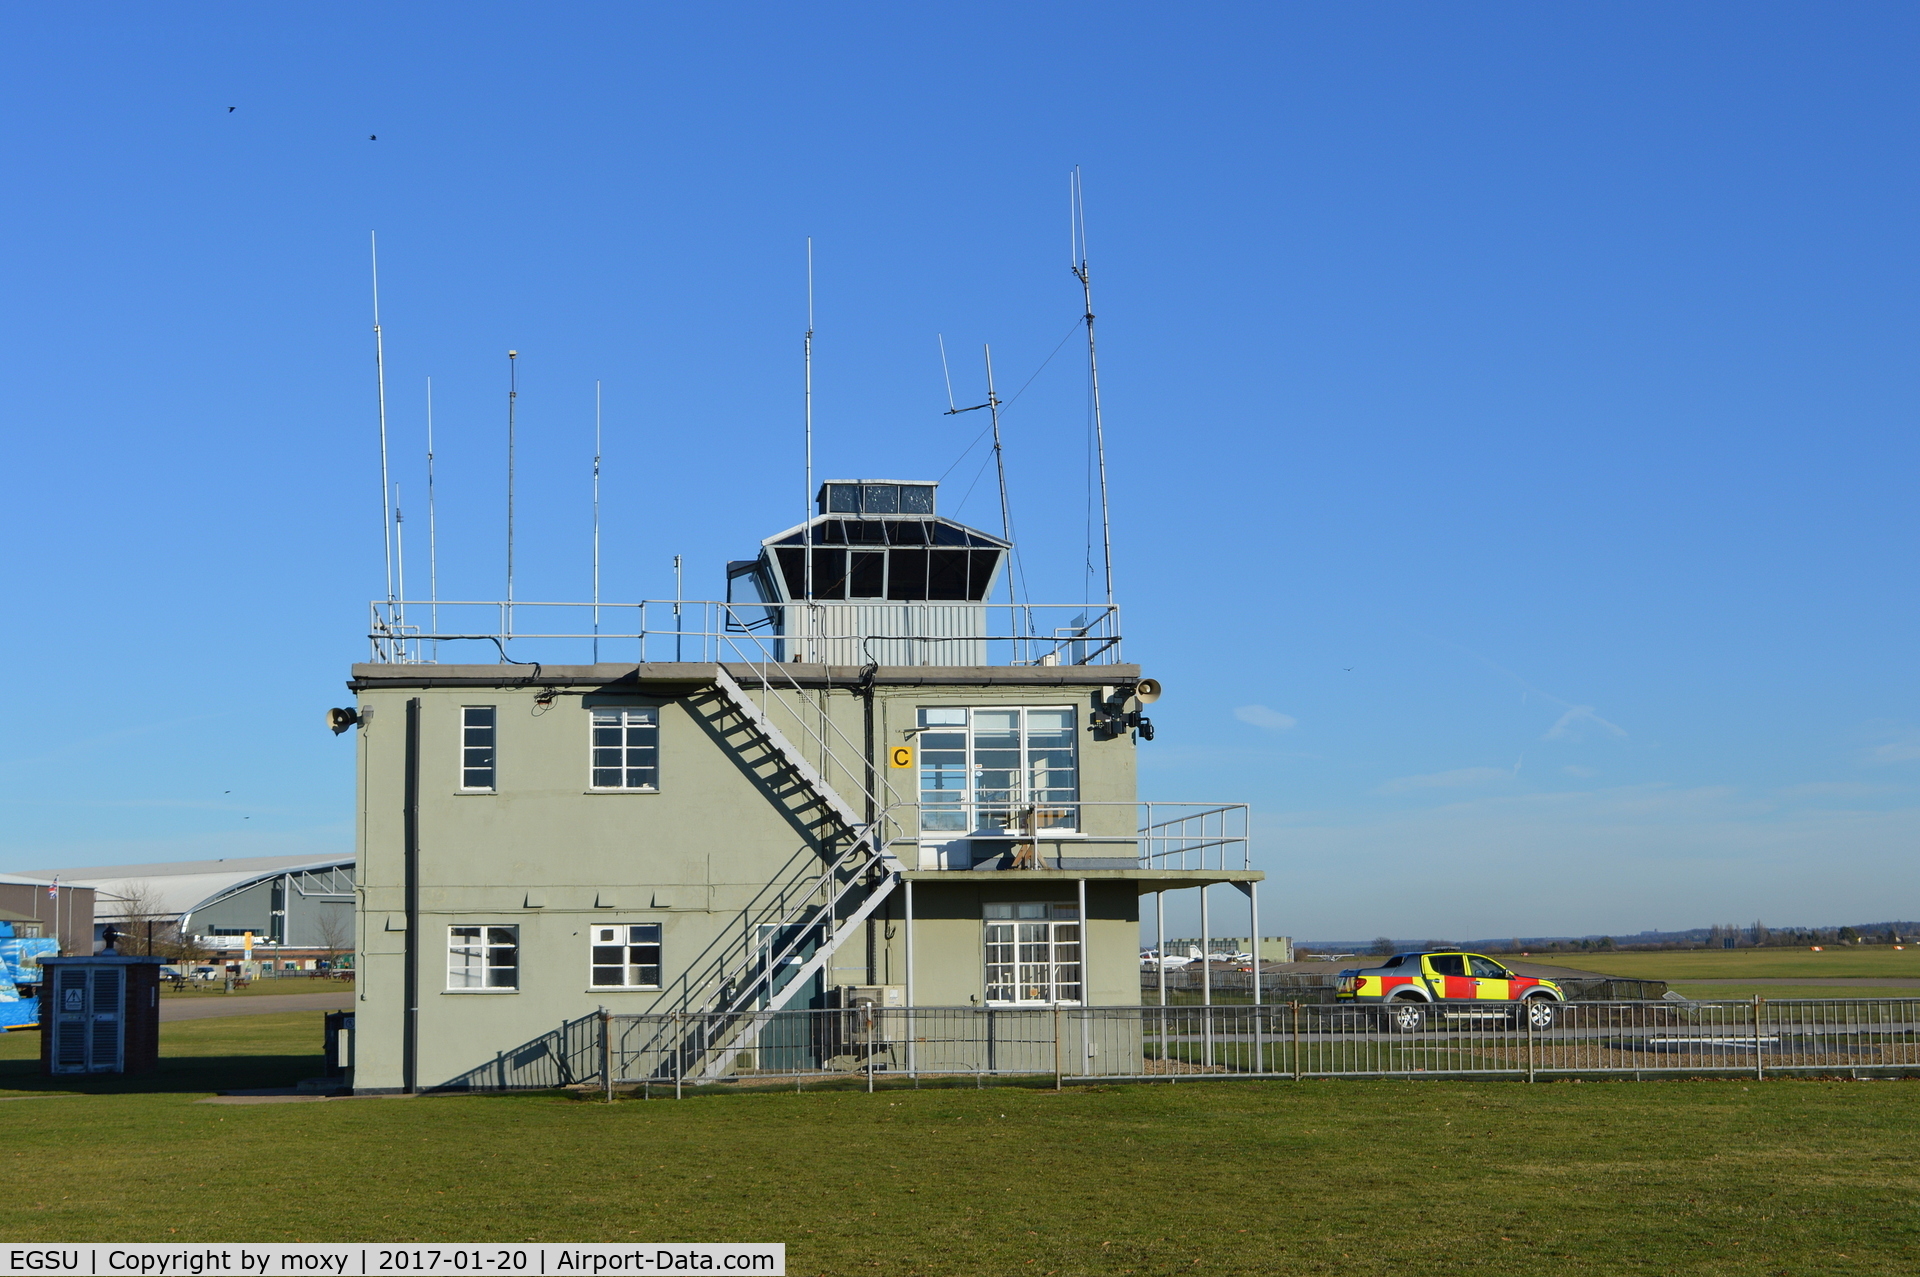 Duxford Airport, Cambridge, England United Kingdom (EGSU) - Watch Office/Control Tower at Duxford.